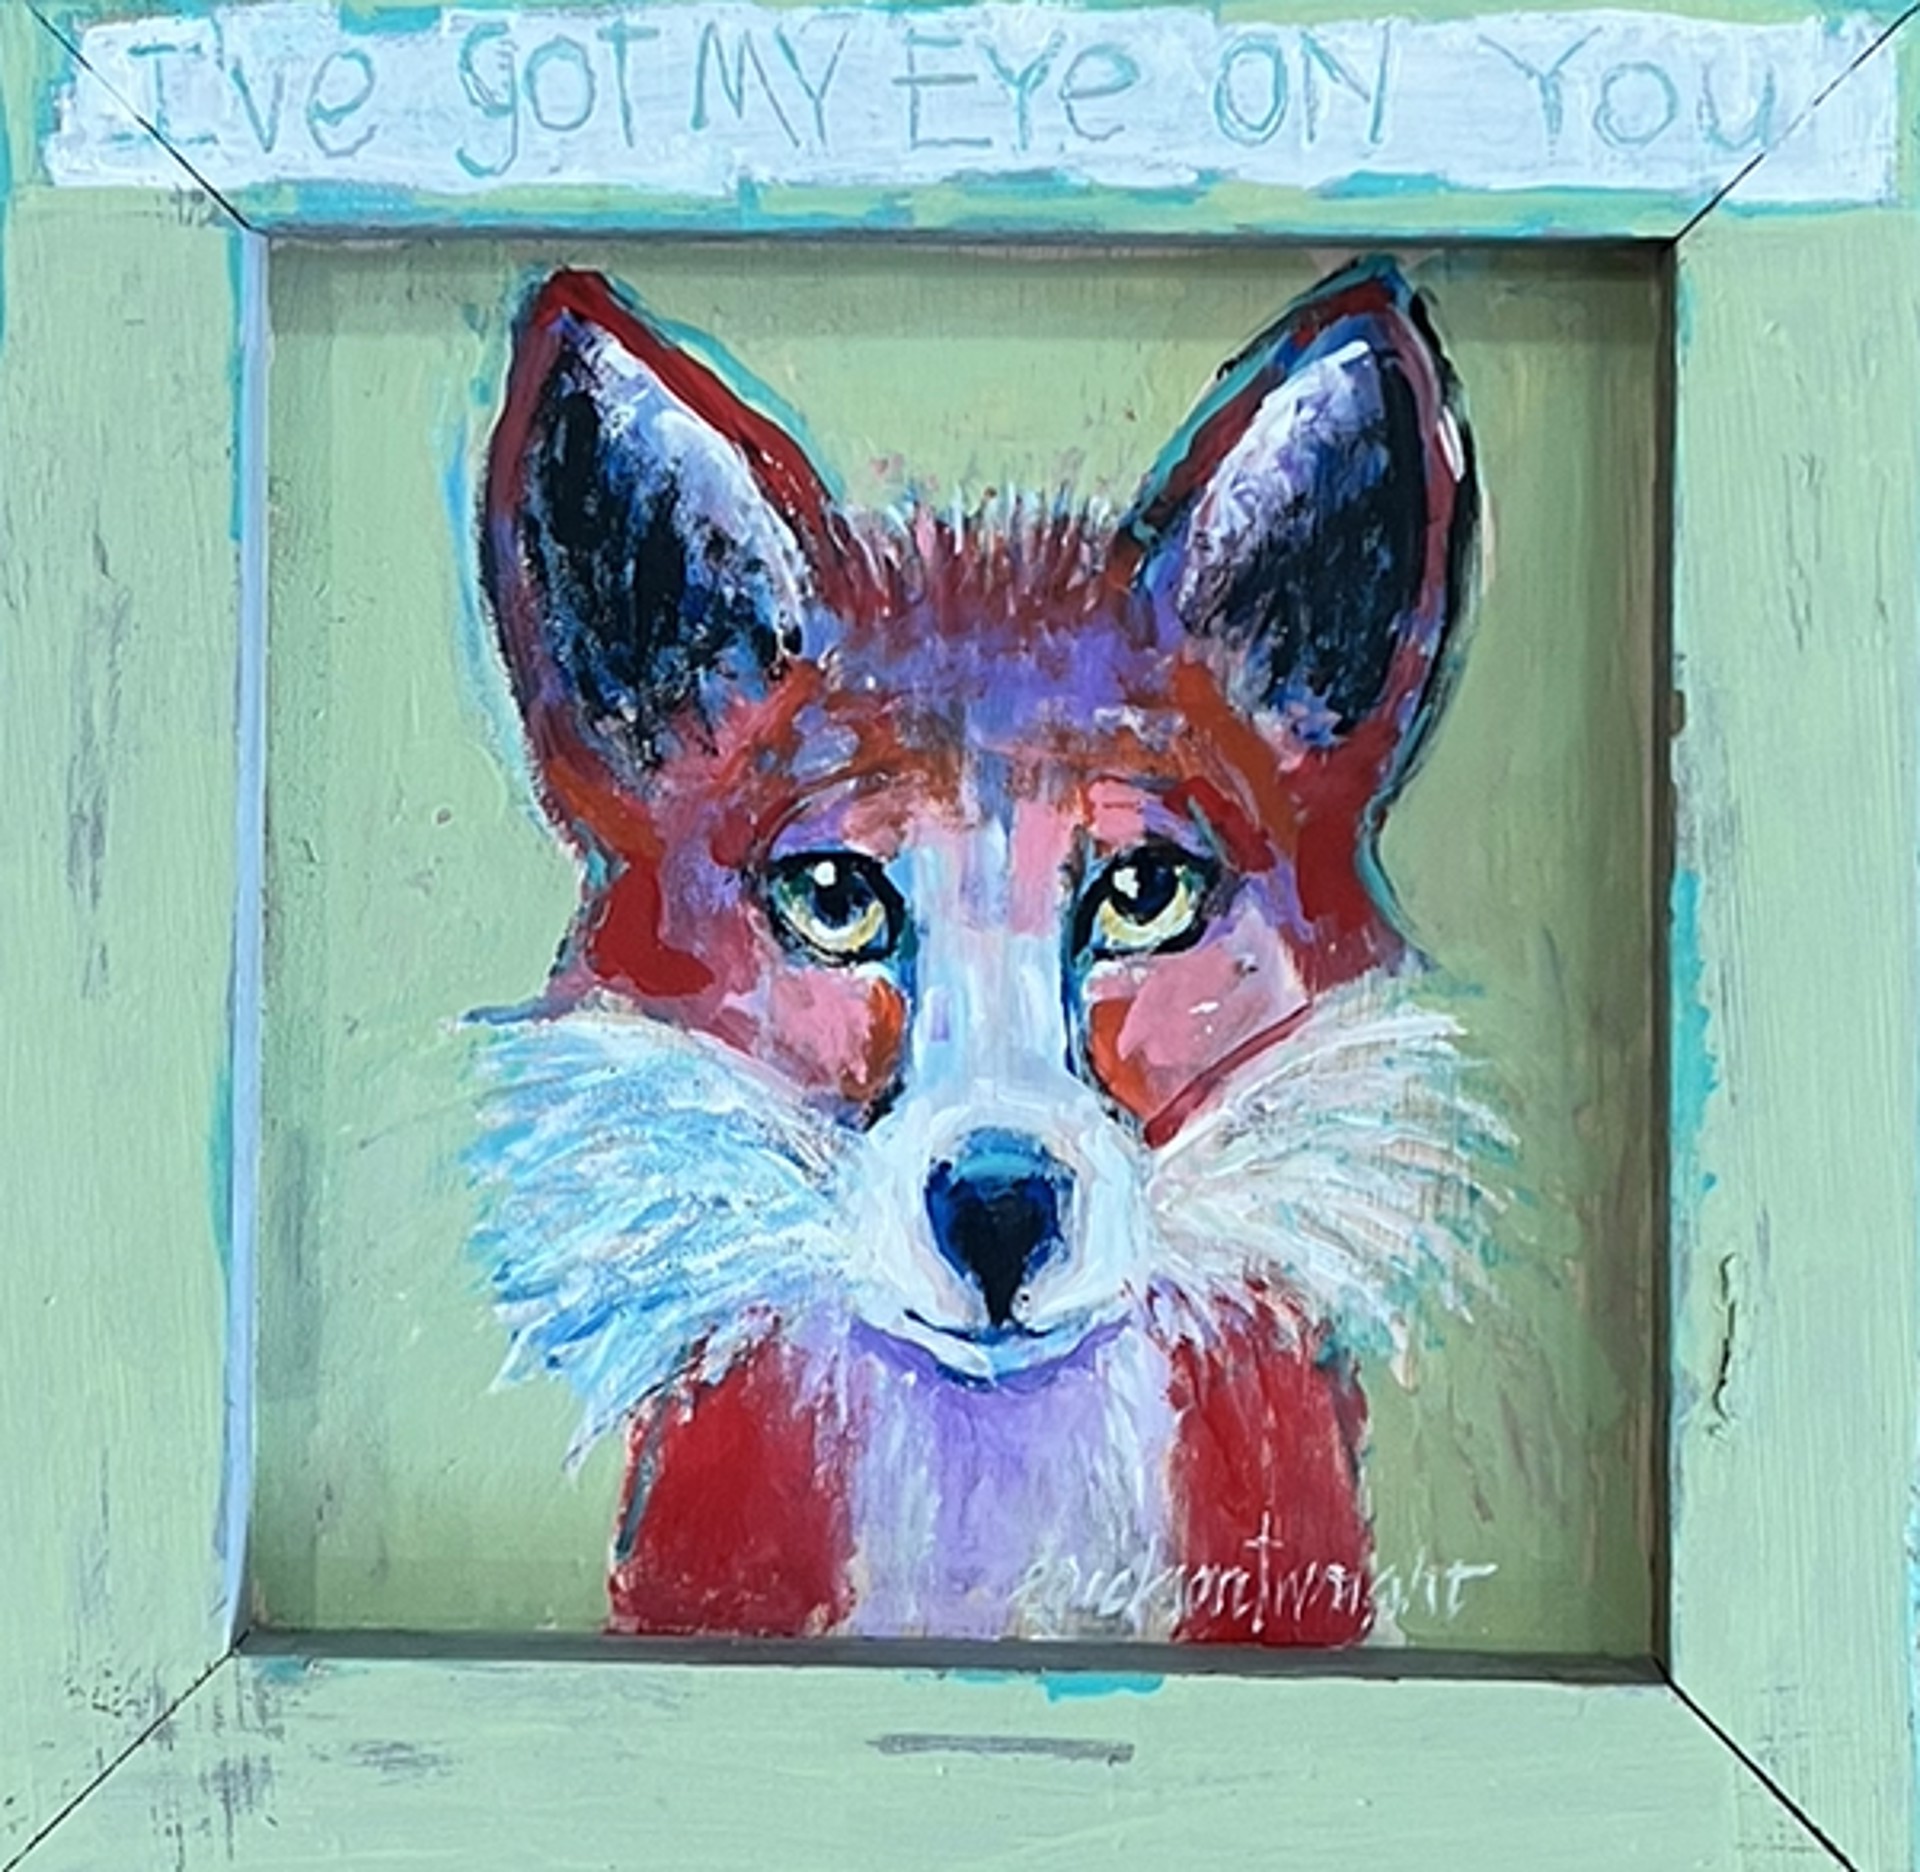 Ive Got My Eye On You by Sandra Erickson Wright